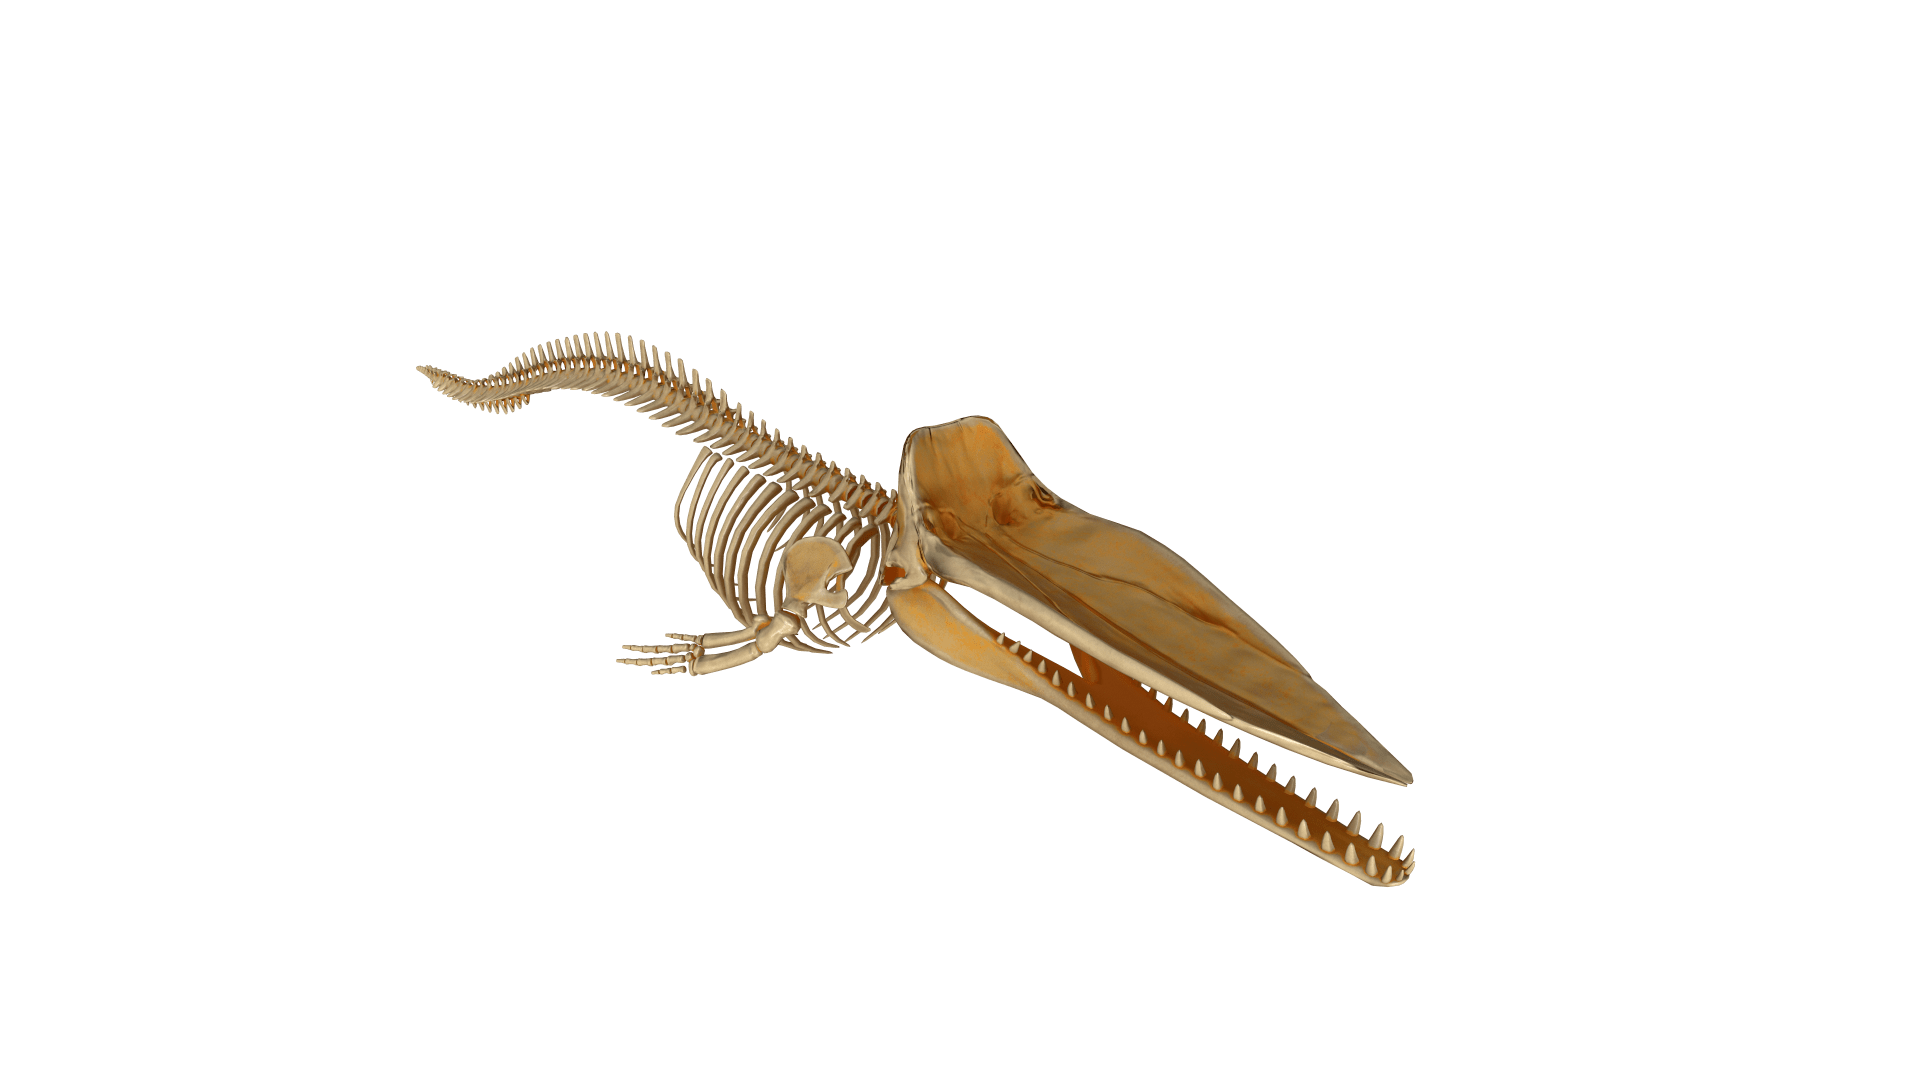 Photo of a sperm whale skeleton